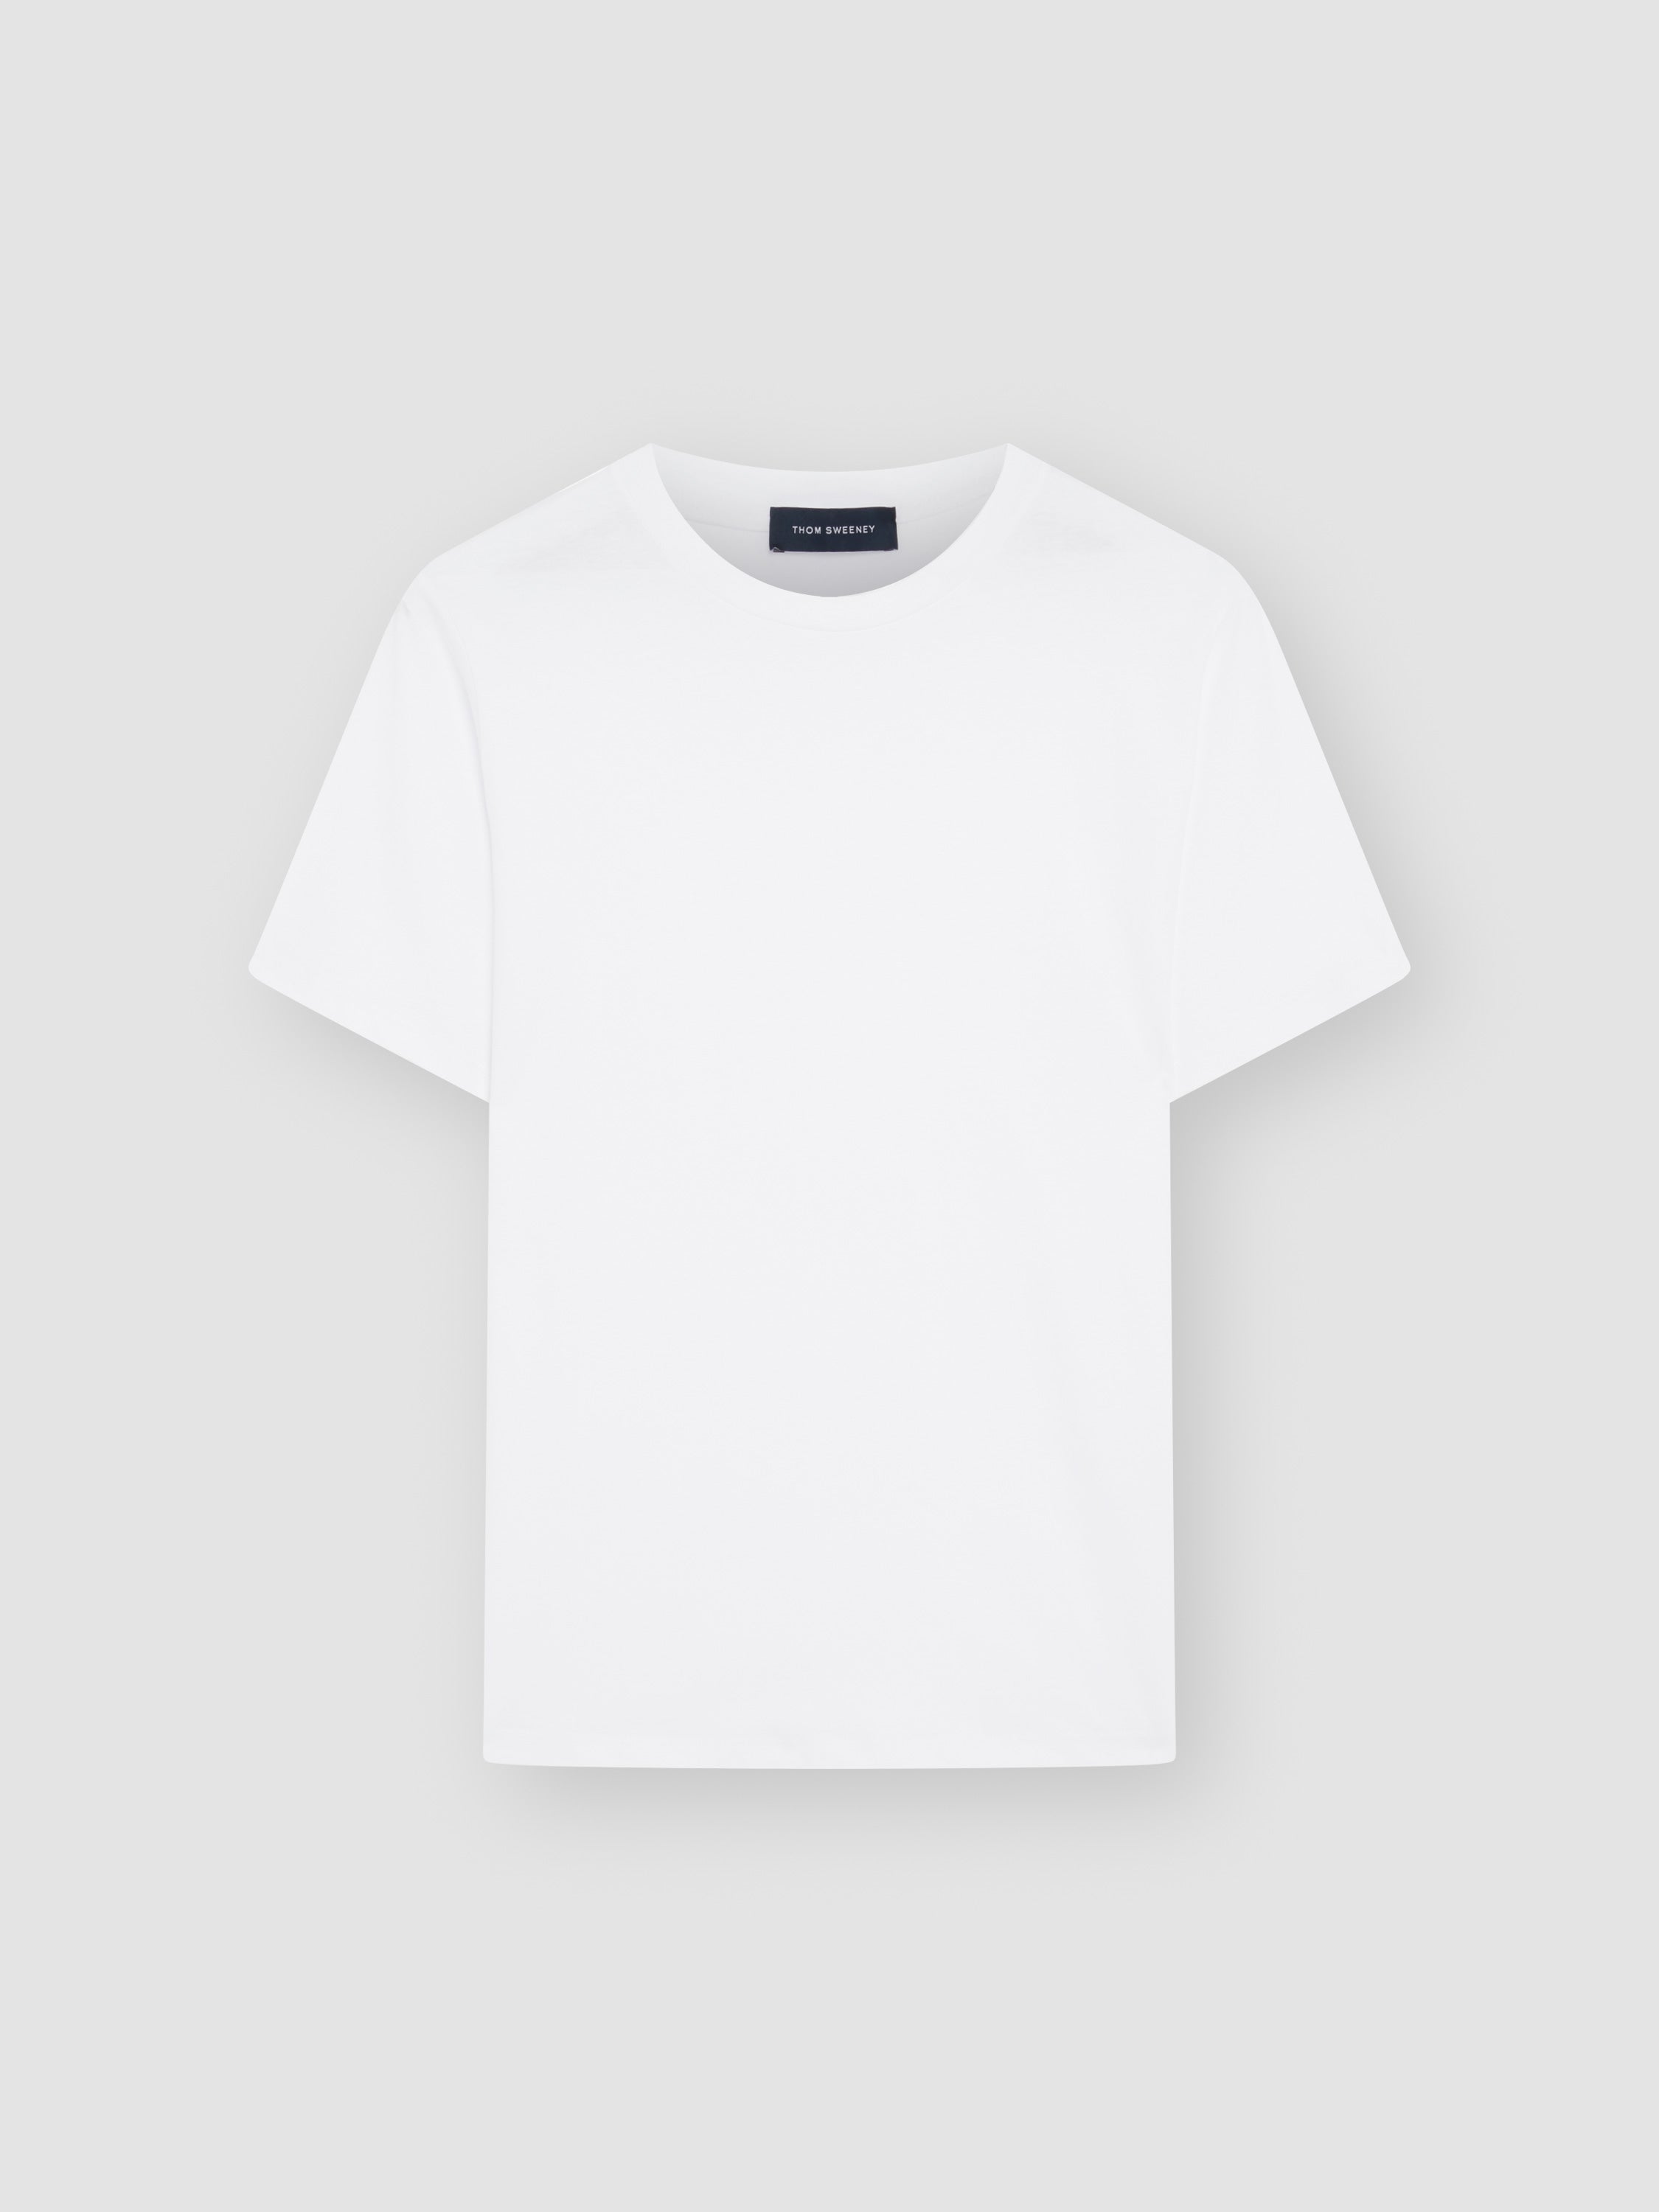 Cotton Classic T-Shirt White Product Image